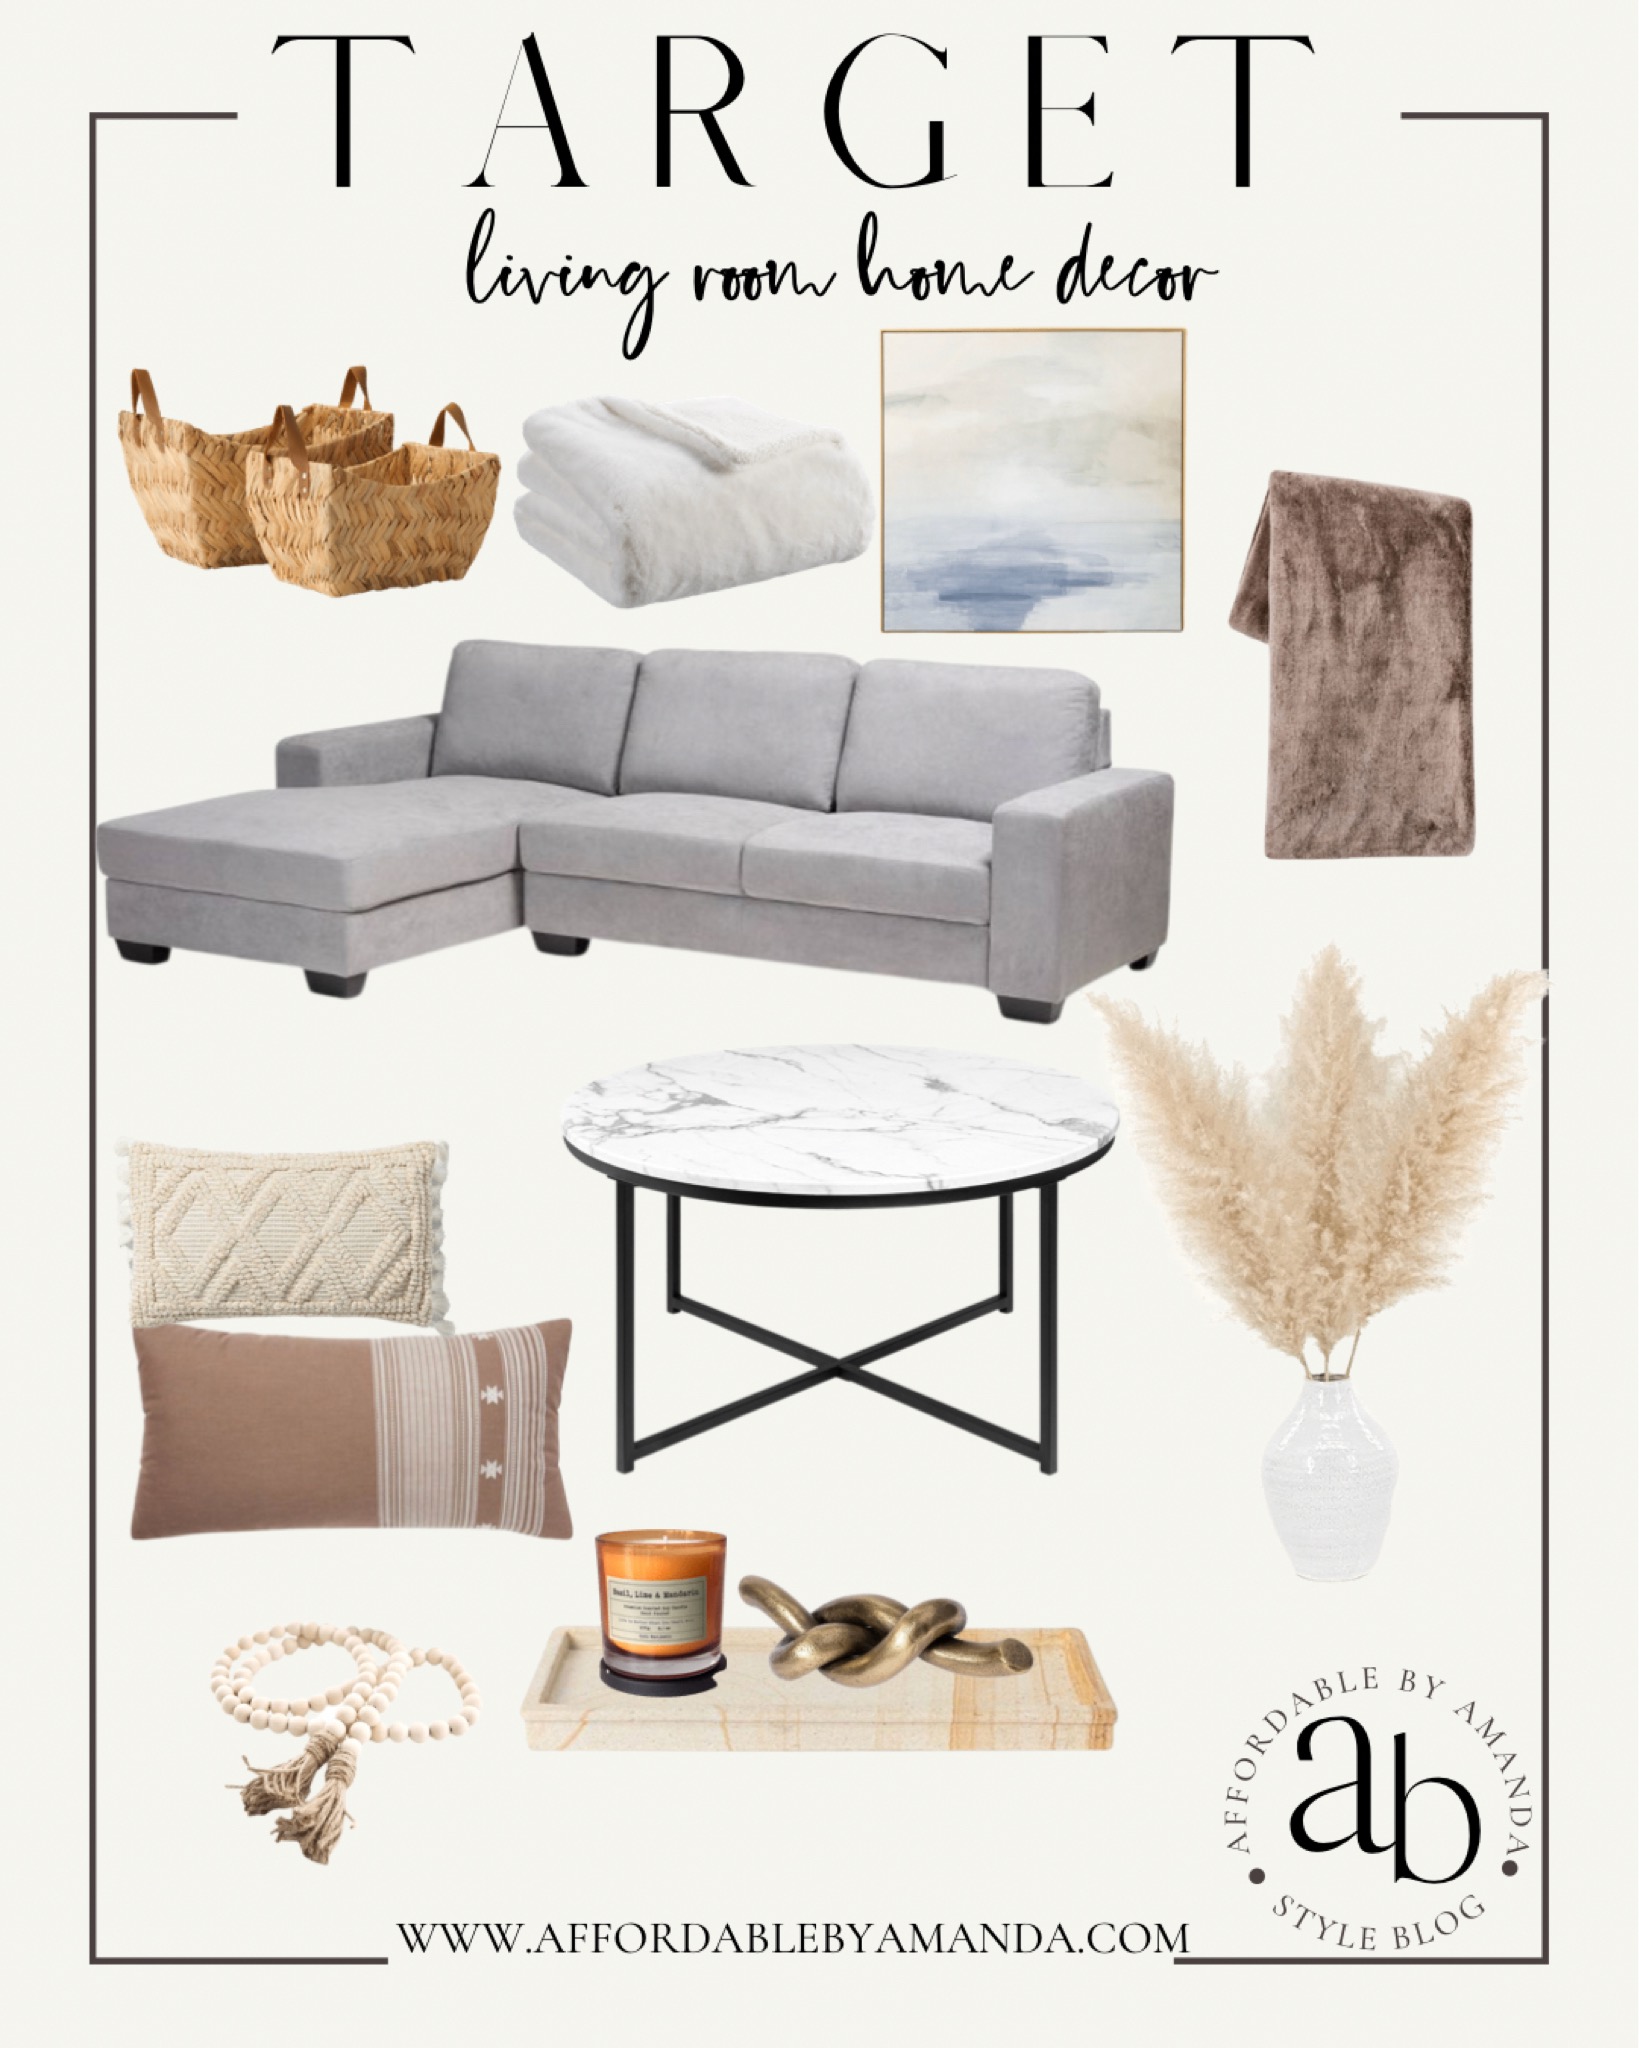 Target Living Room Home Decor - Spring 2021 - Affordable by Amanda